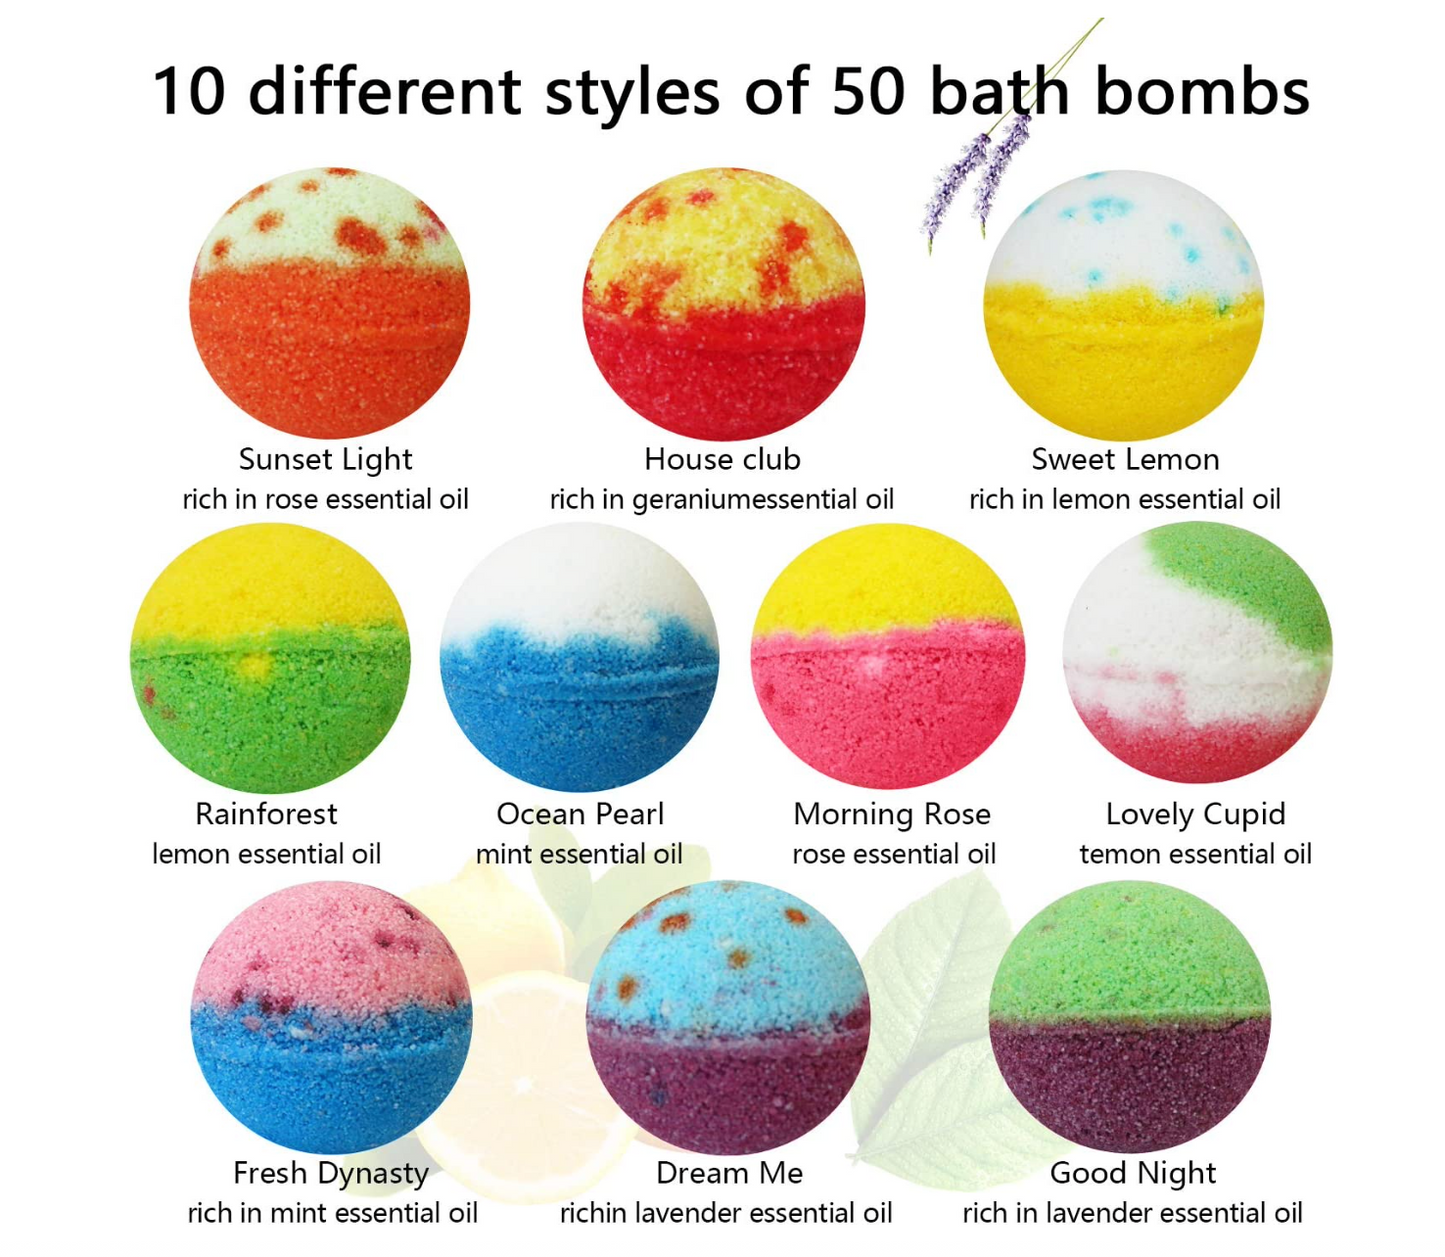 Nagaliving Bath Bombs Gift Set, 50 Handmade Bulk Bath Bombs for Kids, Women, Men, Wonderful Fizz Effect Bath Gift for Valentine's Day, Christmas & Any Anniversaries